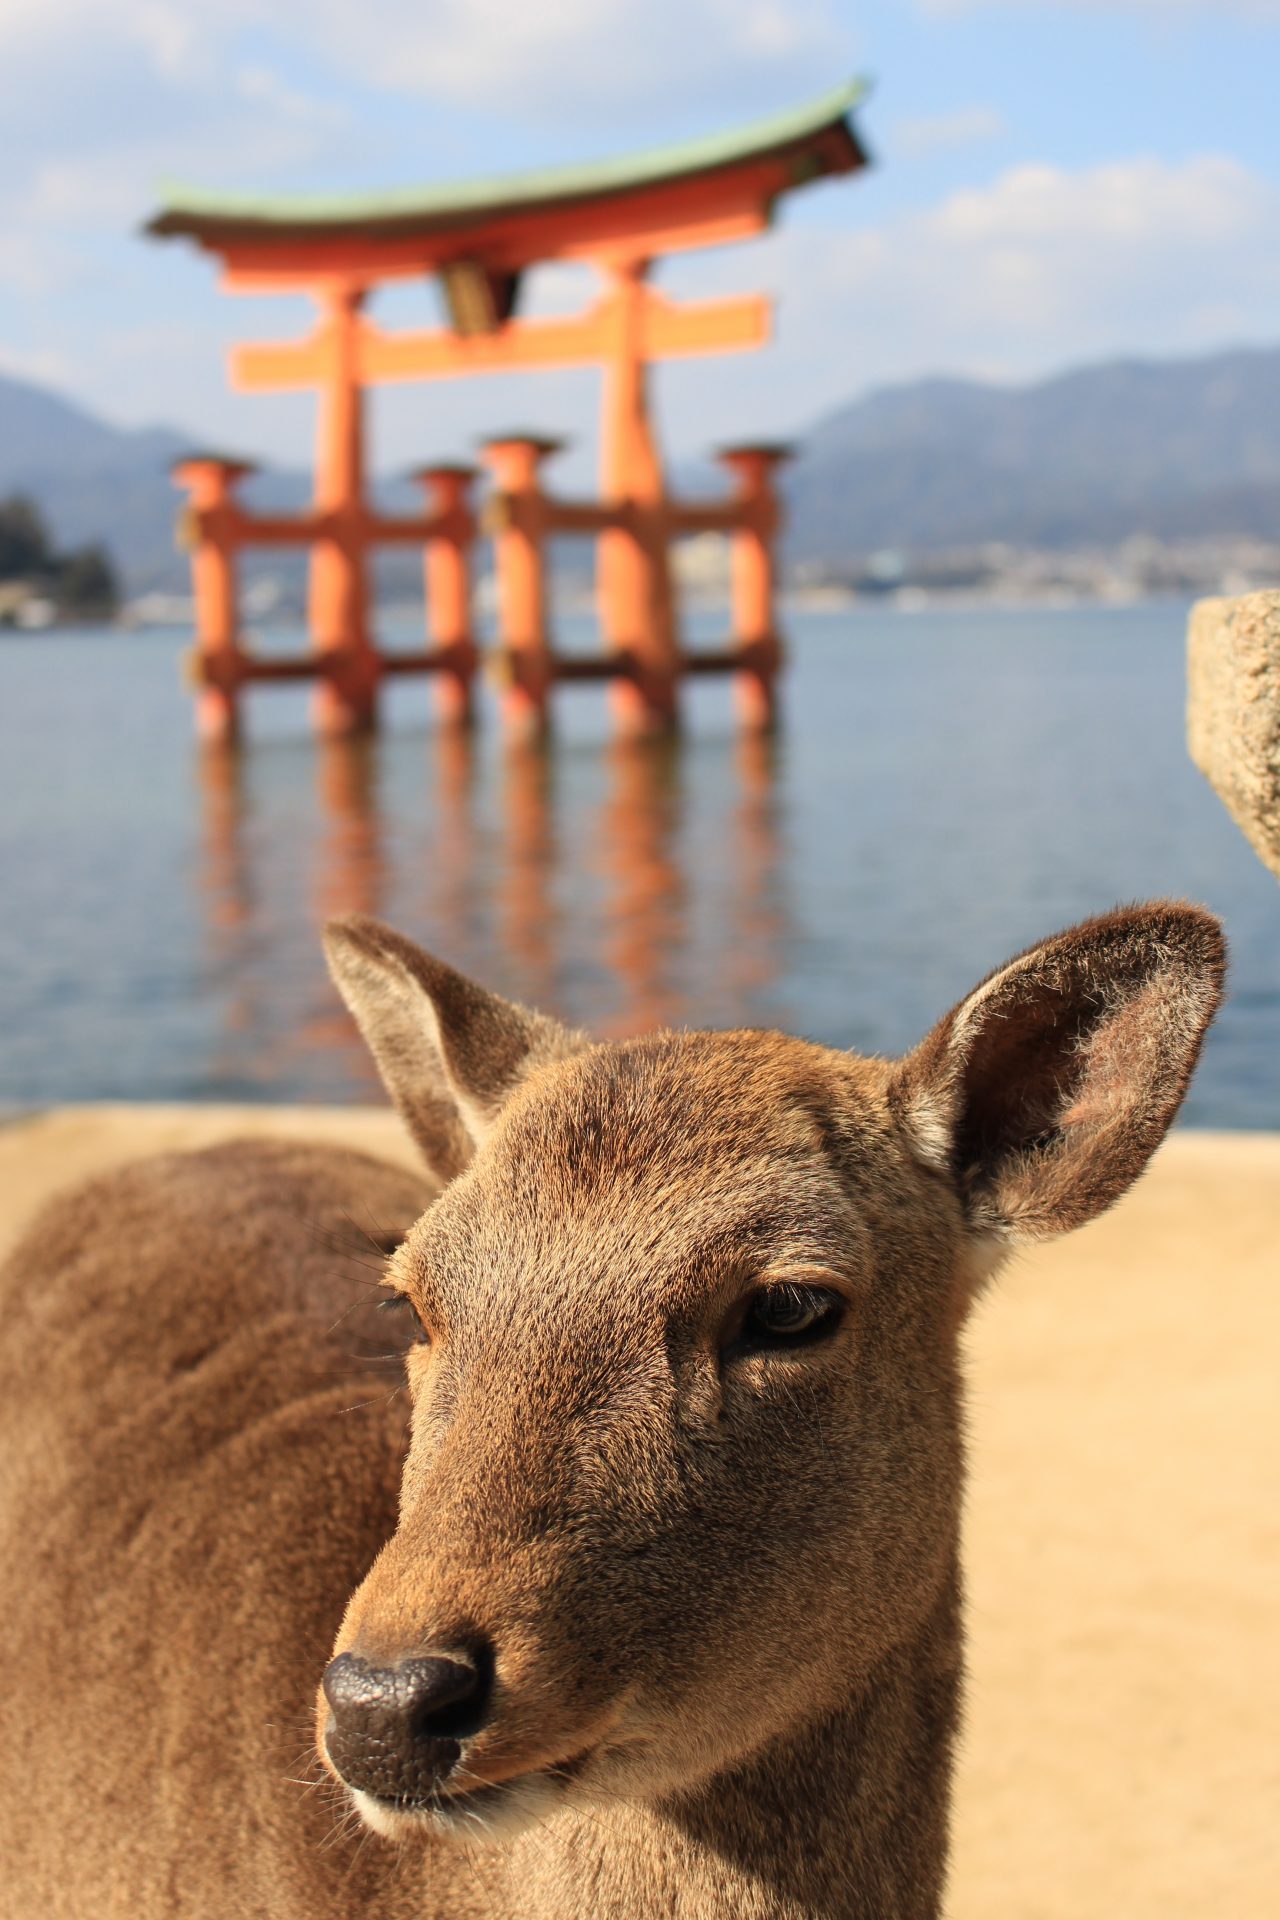 miyajima deer torii gate - Miyajima Day Trip from Kyoto, Japan